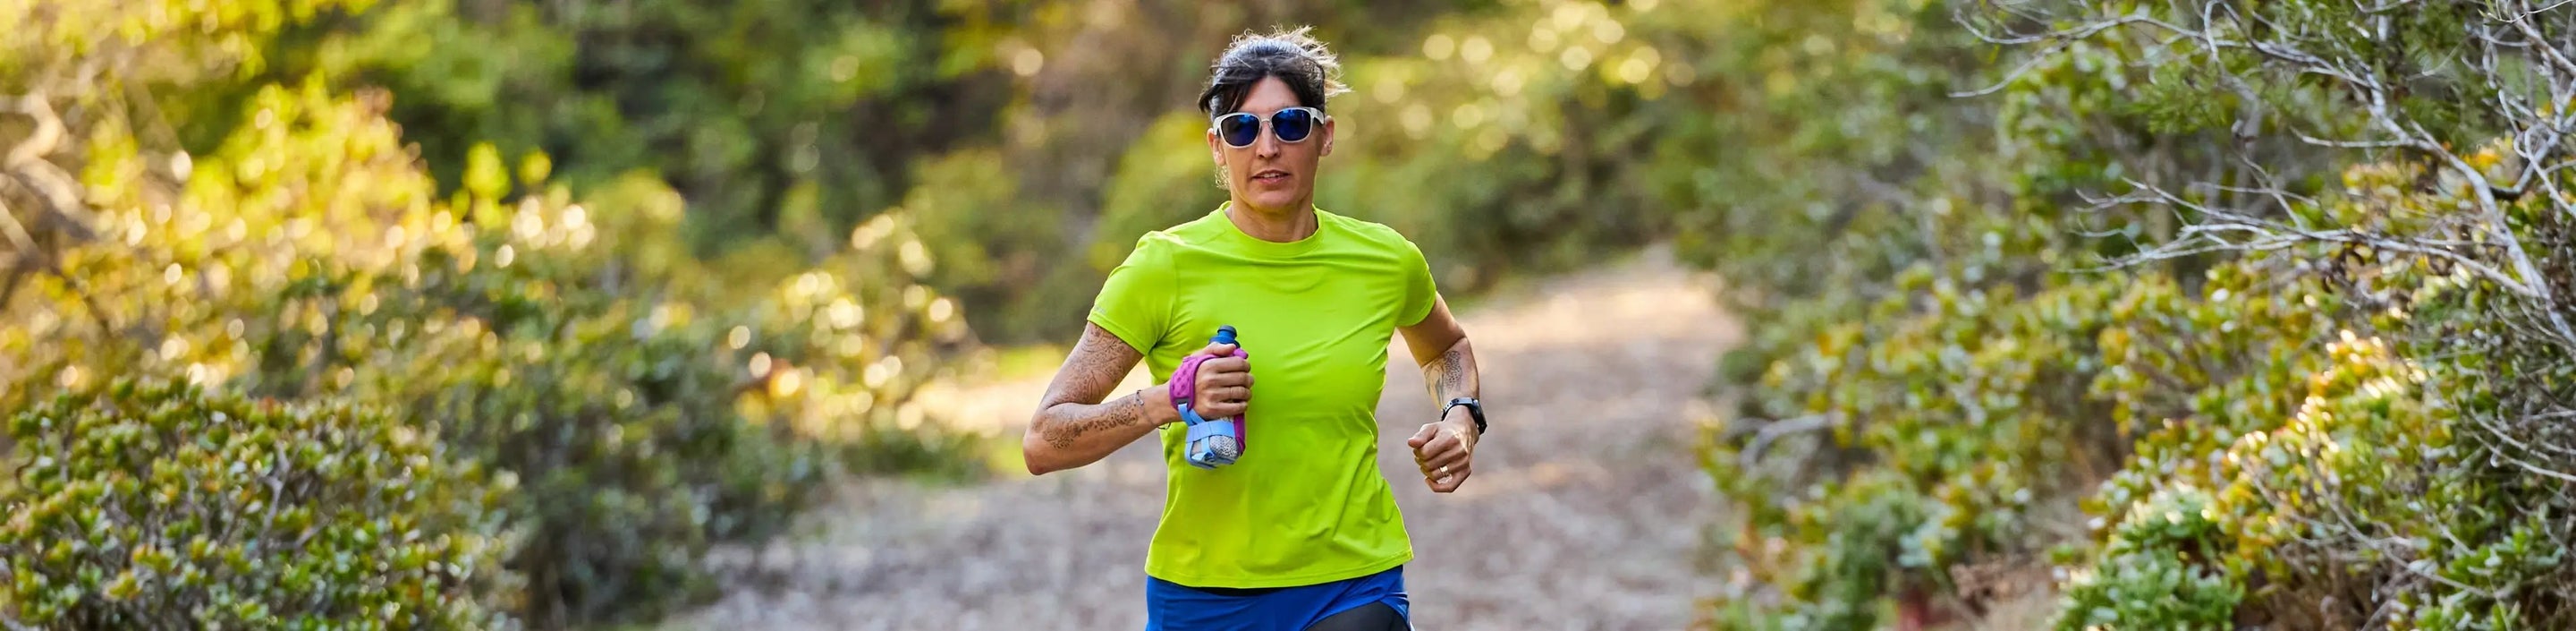 woman running in Nathan Sports Short Sleeve Shirt using handheld water bottle